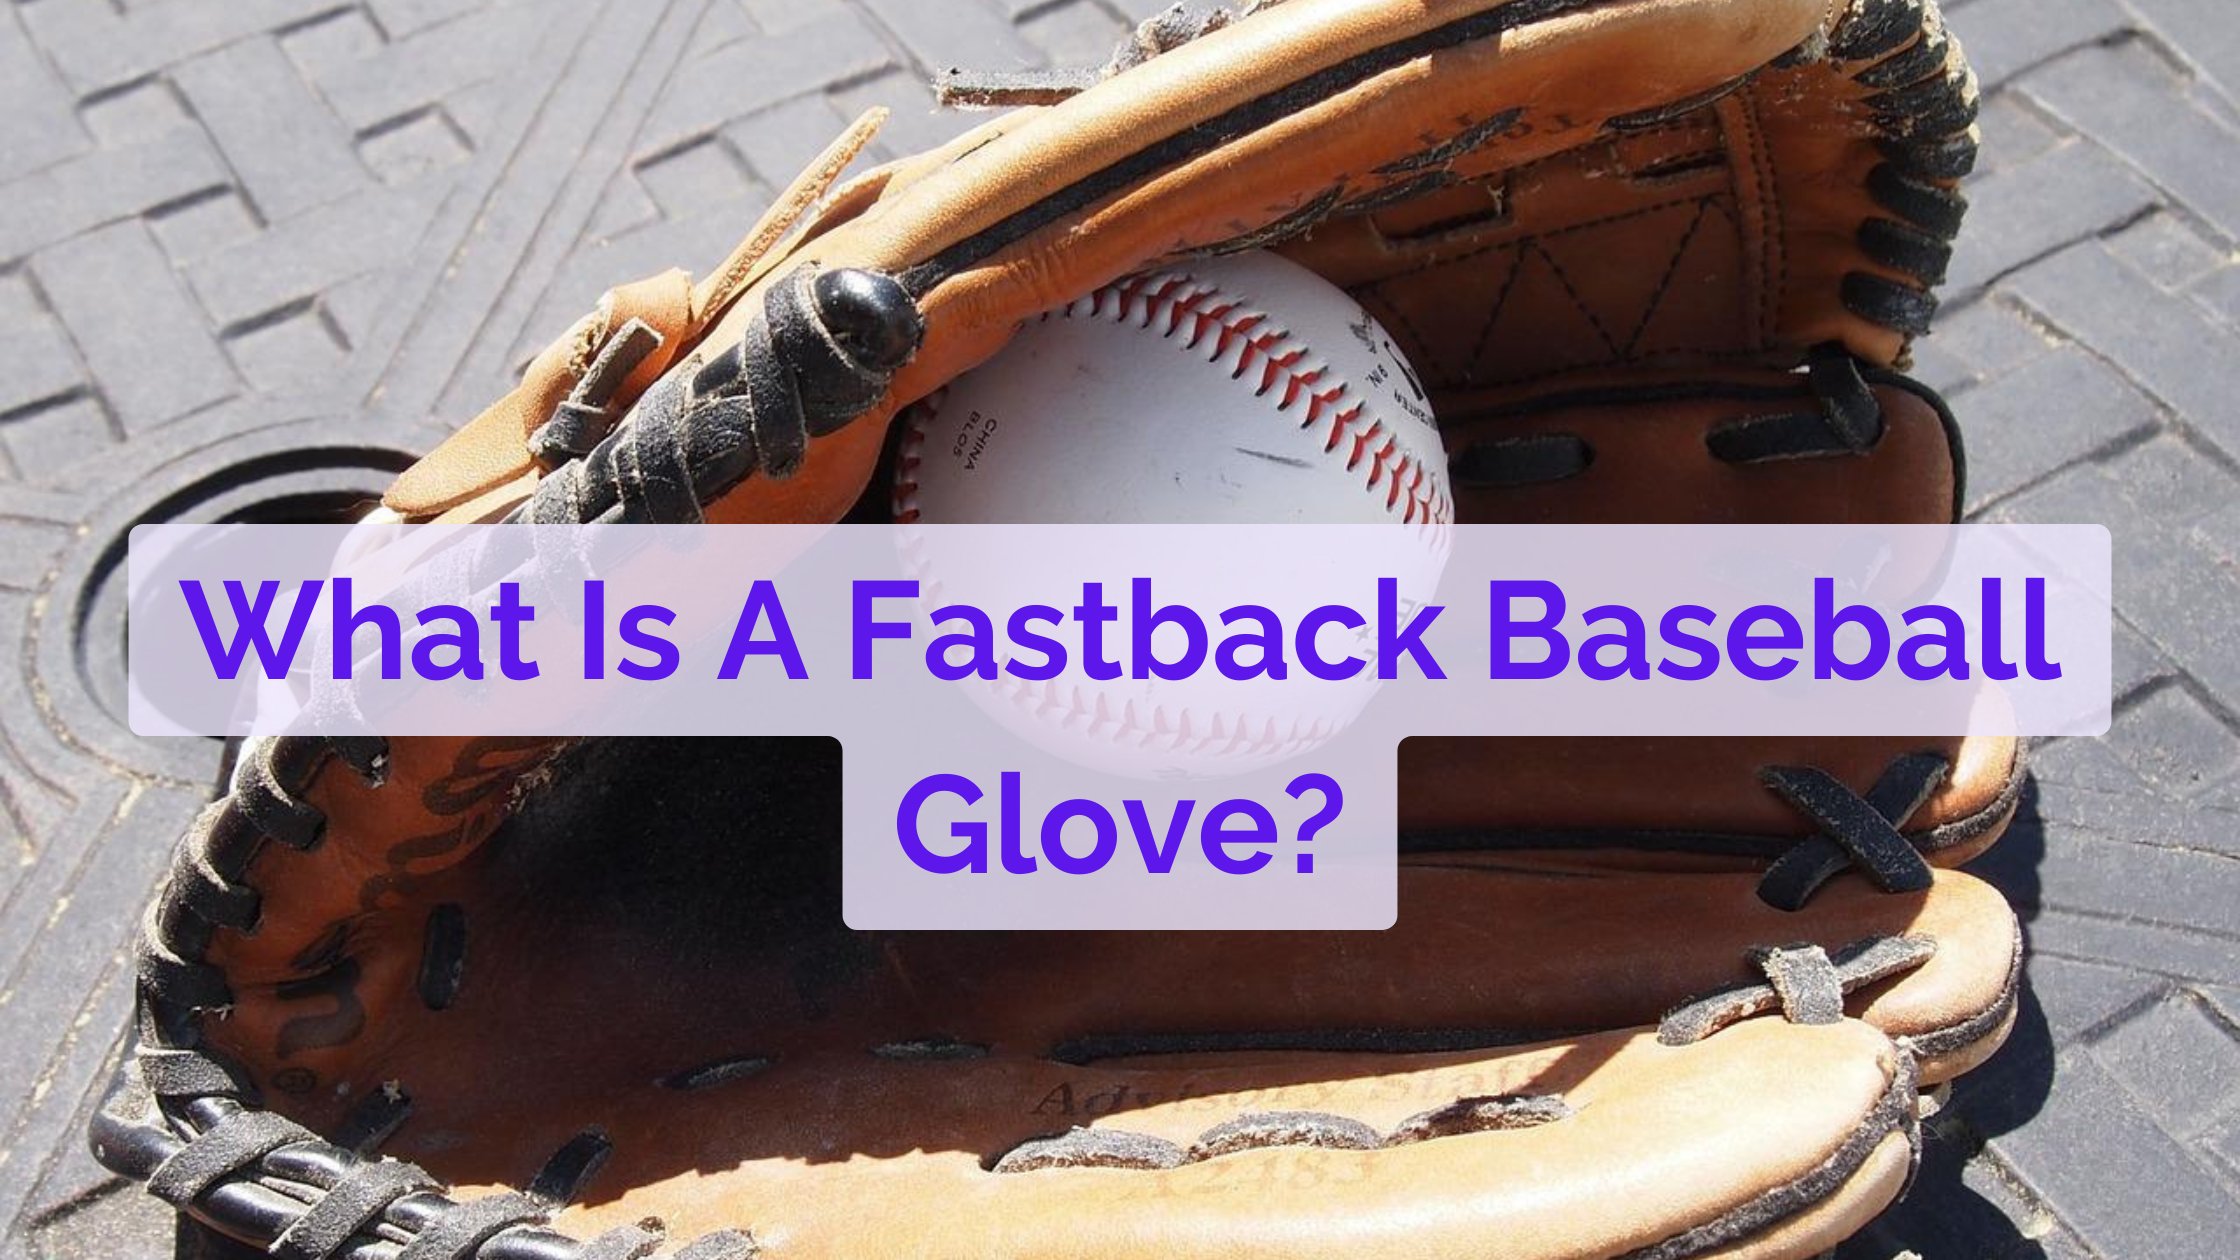 What is a fastback baseball glove